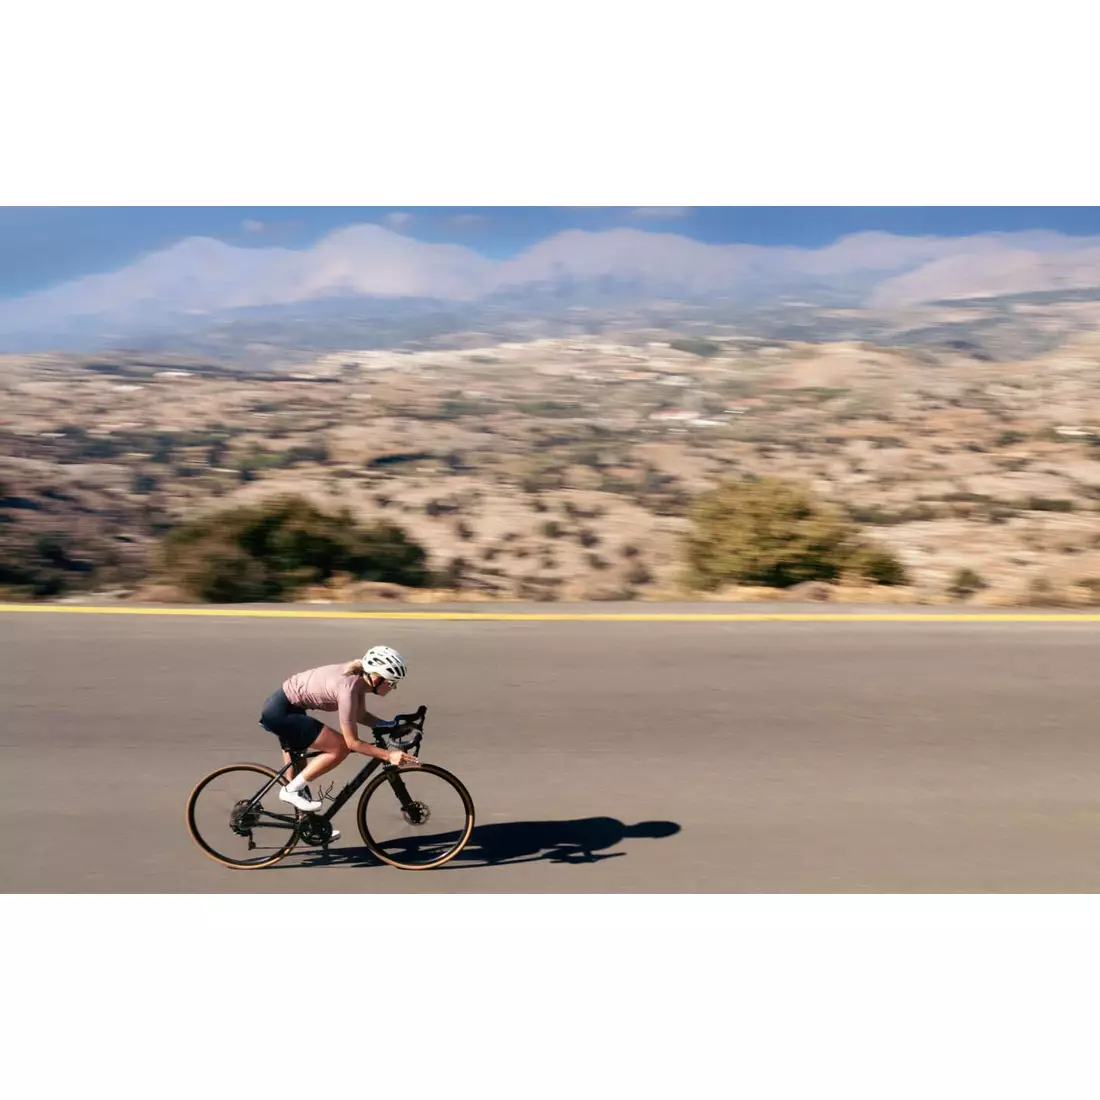 Rogelli DIAGA women's cycling jersey, pink